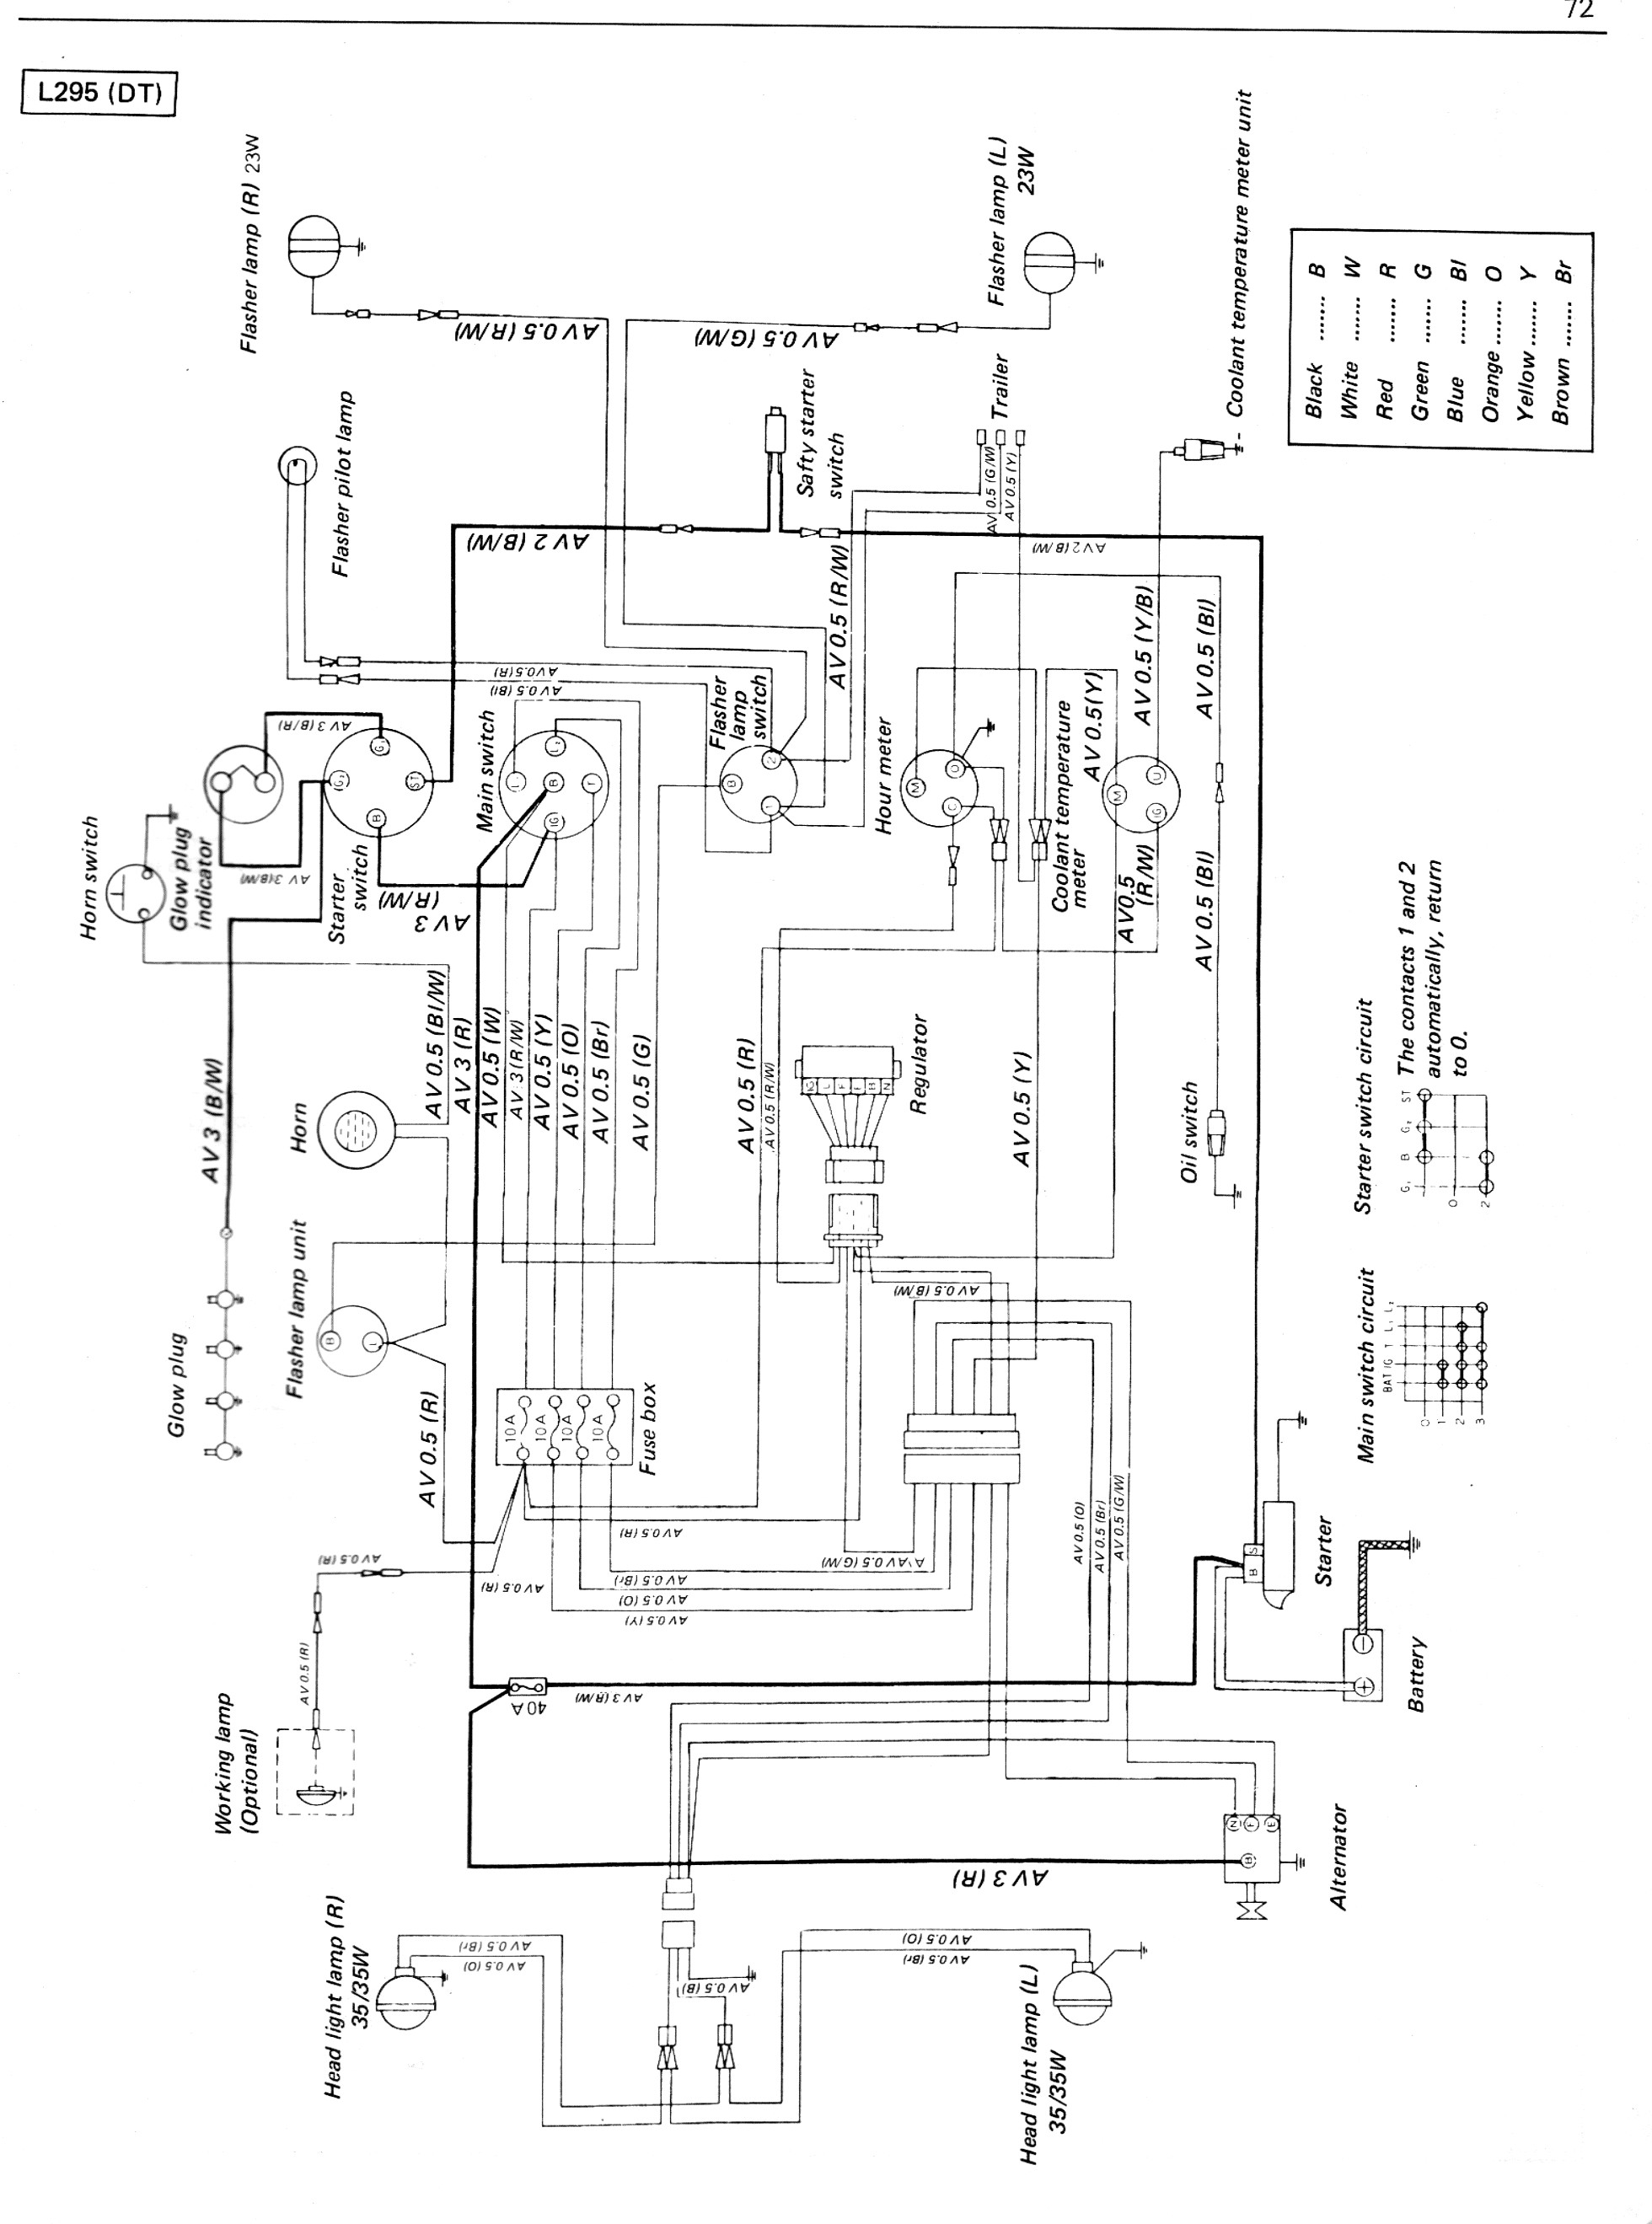 Jeep 4 0 Engine Diagram Patriot Spark Plug Location Free Download Wiring Diagram Schematic Of Jeep 4 0 Engine Diagram